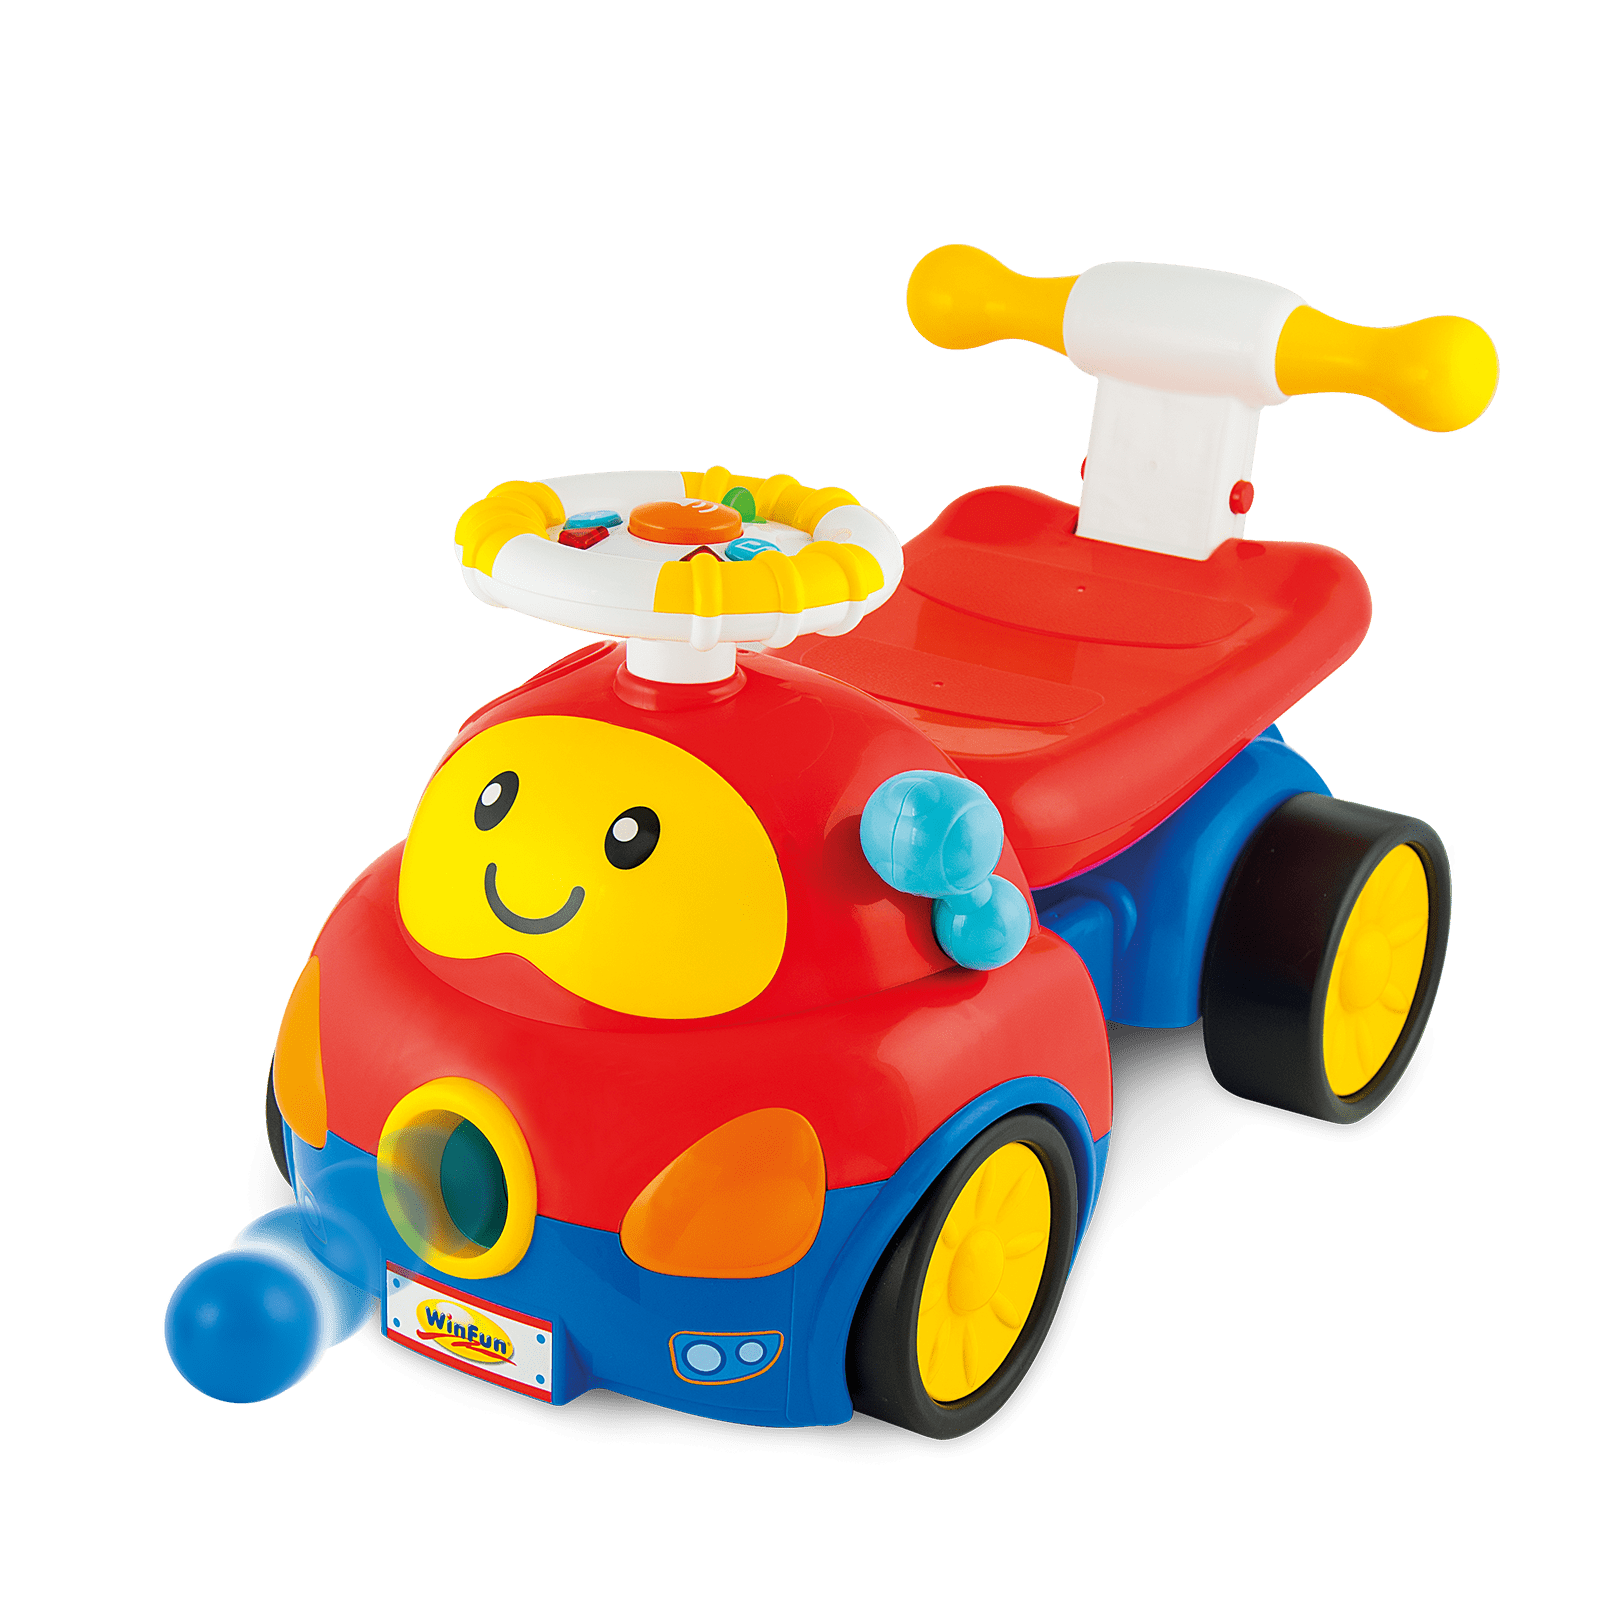 Toy Cars & Vehicles - WinFun Toys - WinFun